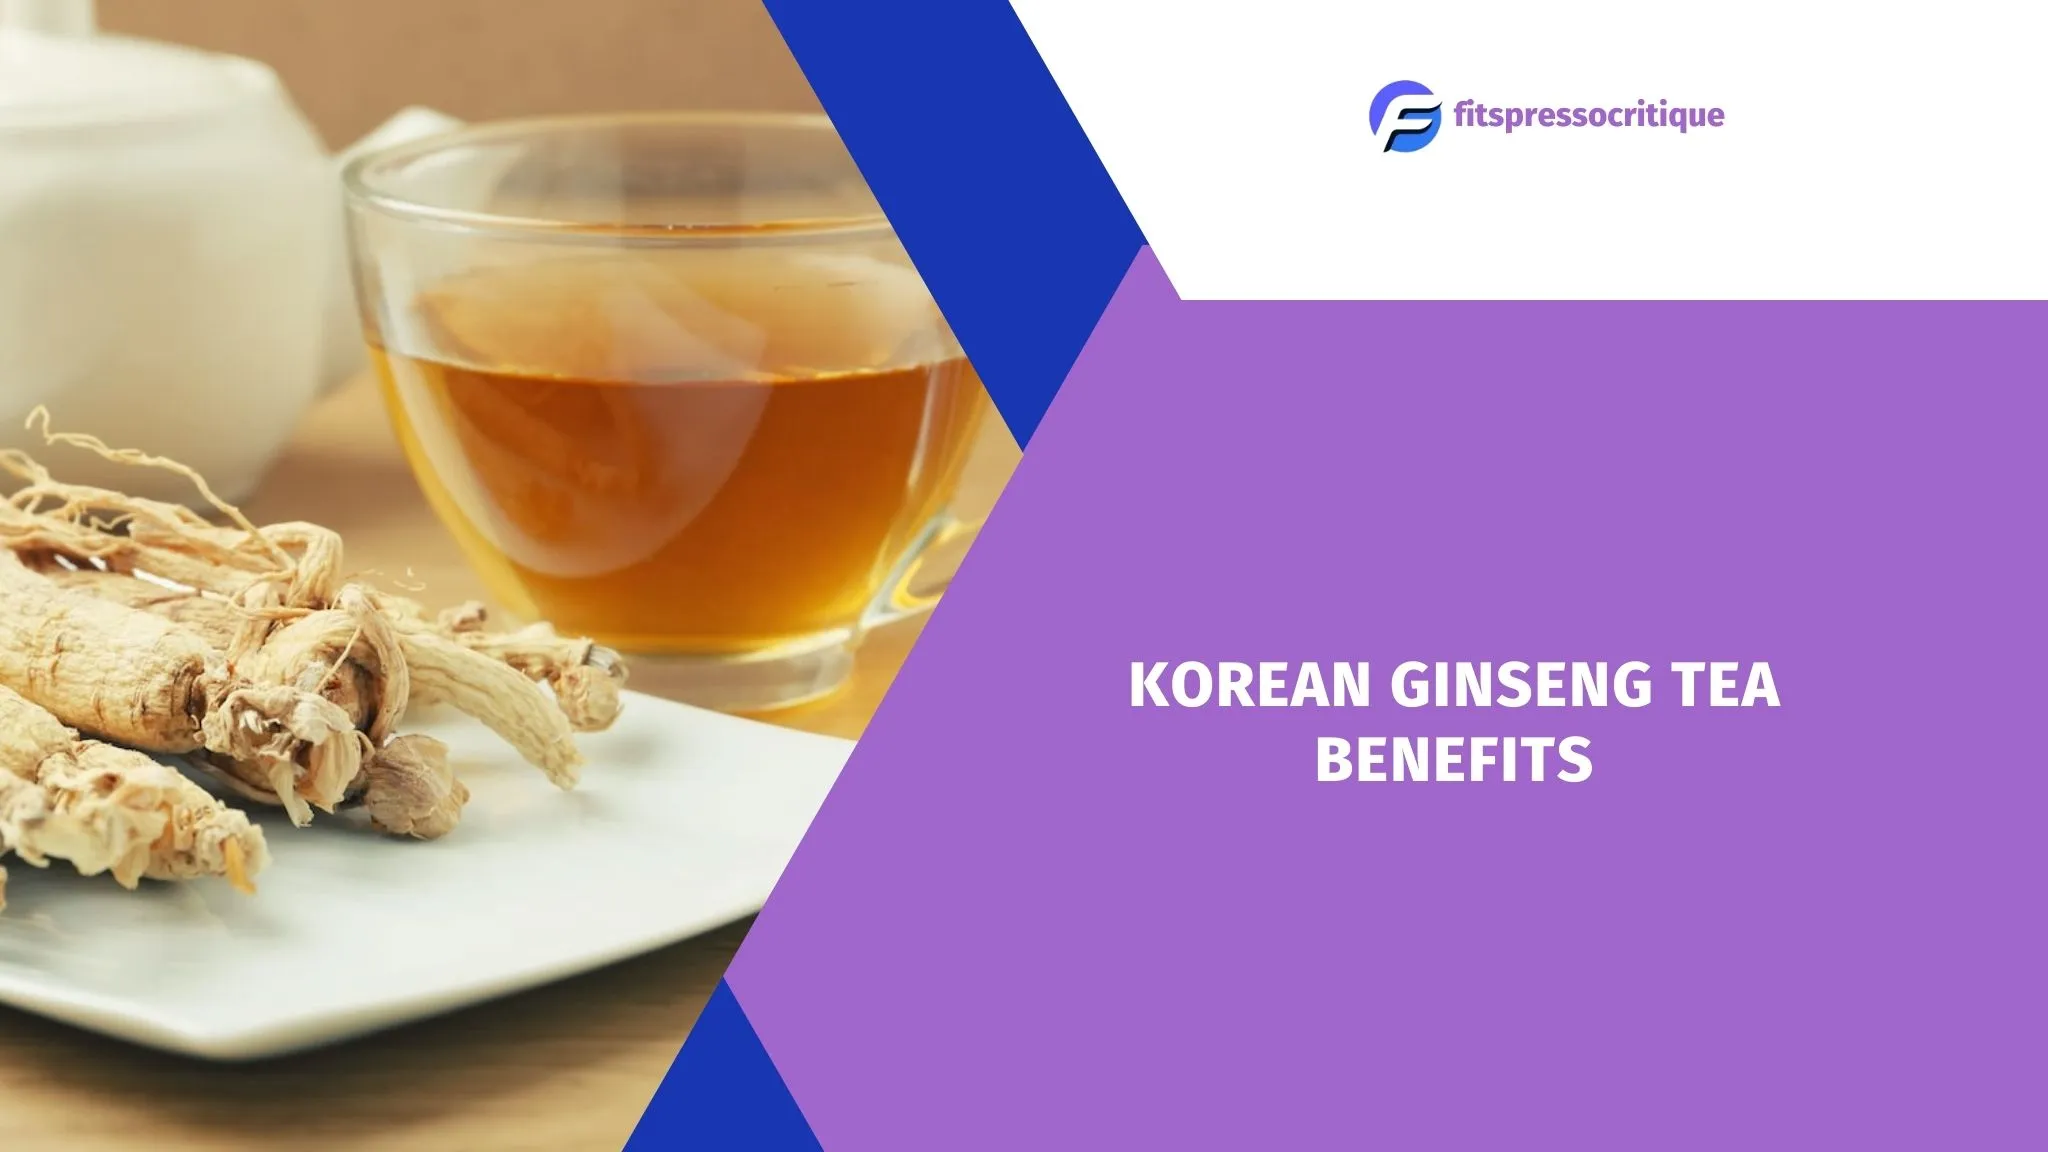 Korean Ginseng Tea Benefits